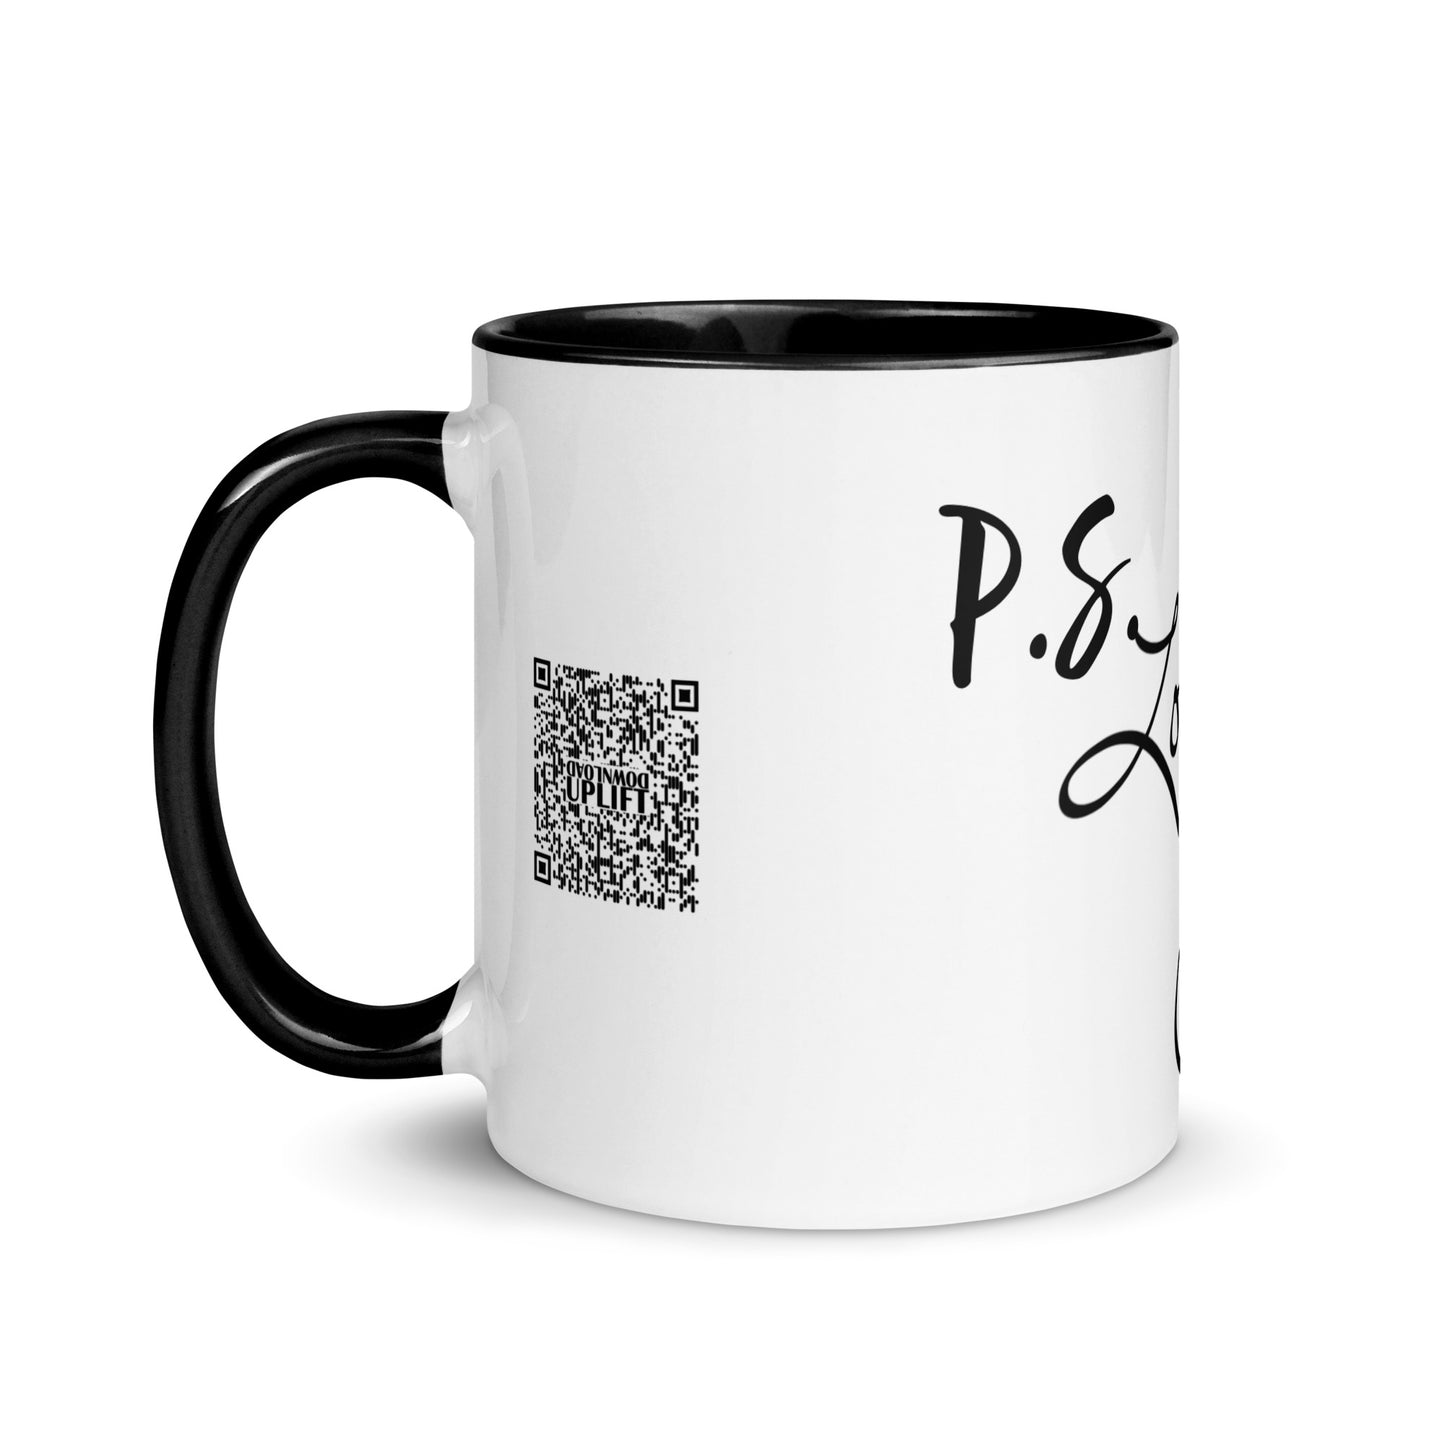 P.S. Love You mug